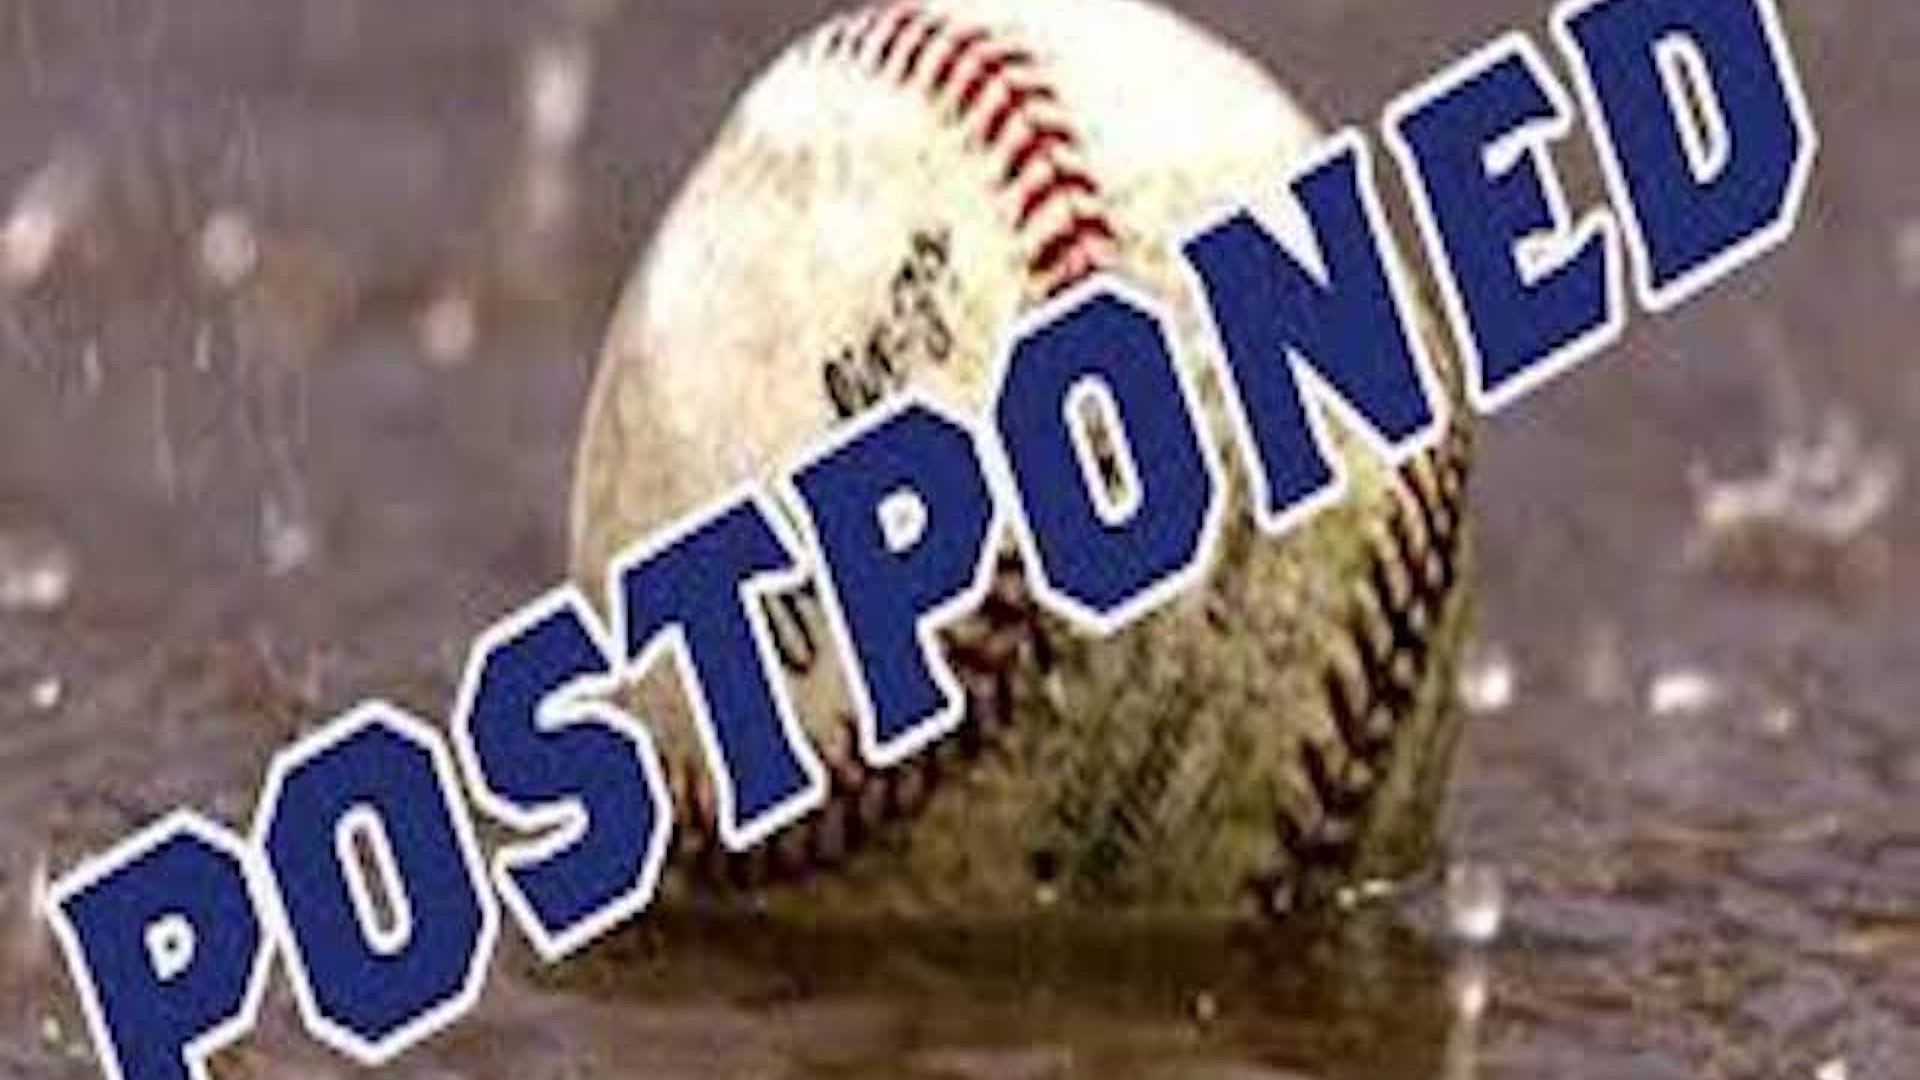 Slide 4 - Dragon Baseball game for tonight, postponed until tomorrow